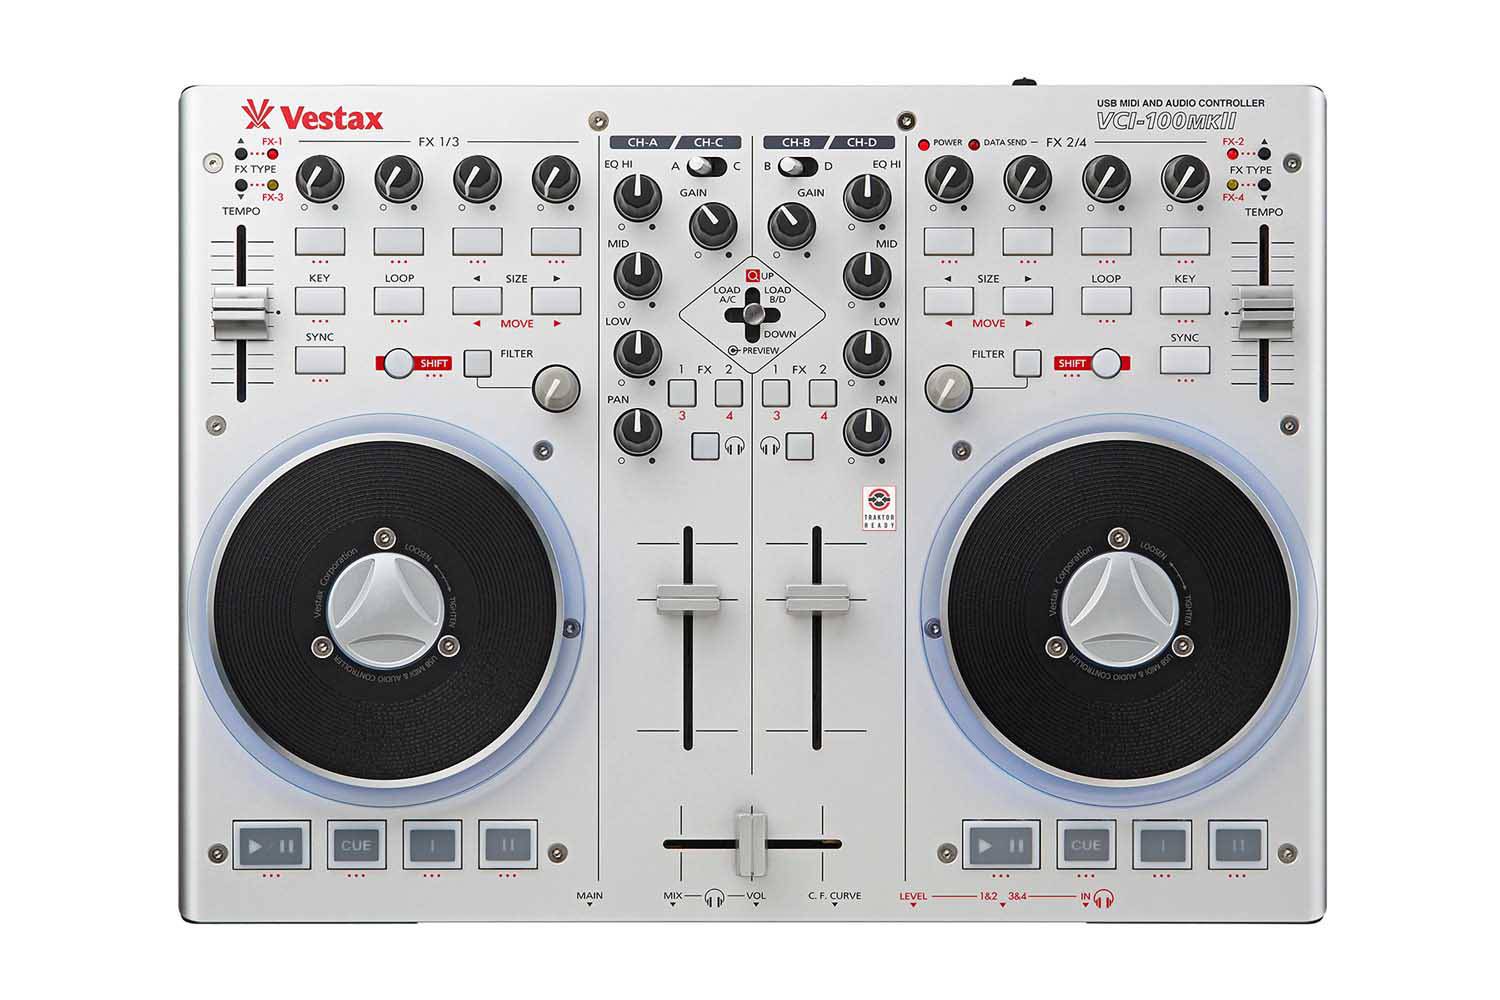 Vestax VCI-100MKII Professional DJ Controller - ORIGINAL PACKAGING - Hollywood DJ